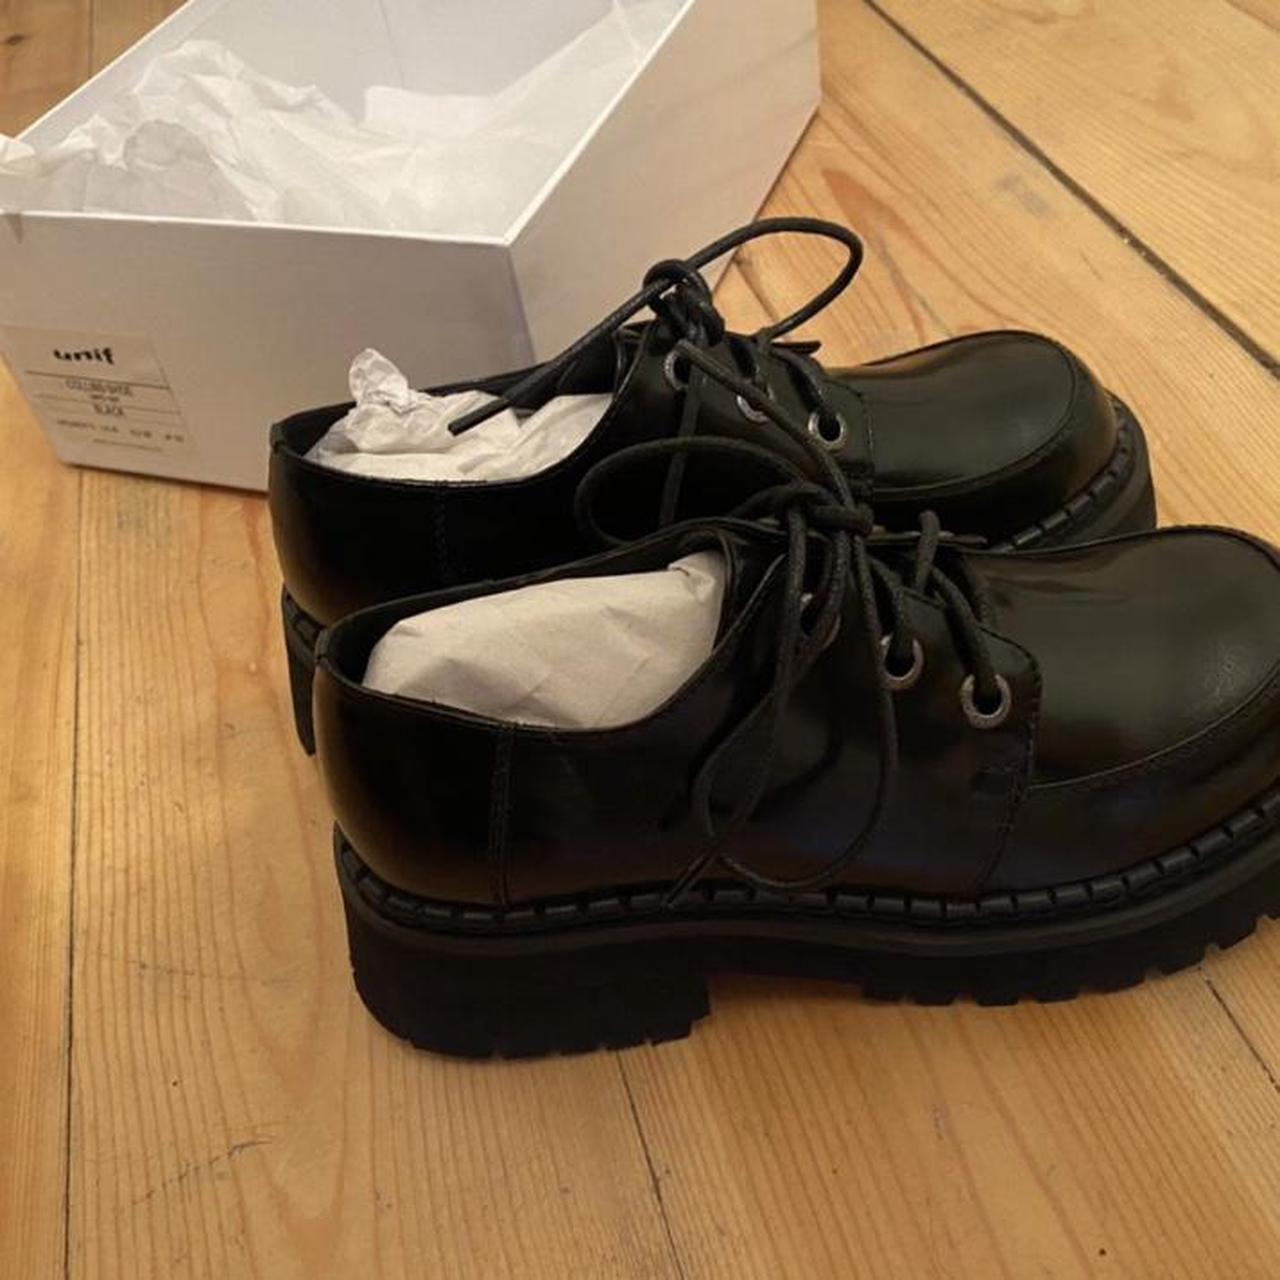 Product Image 1 - unif black collins shoes

size: 4